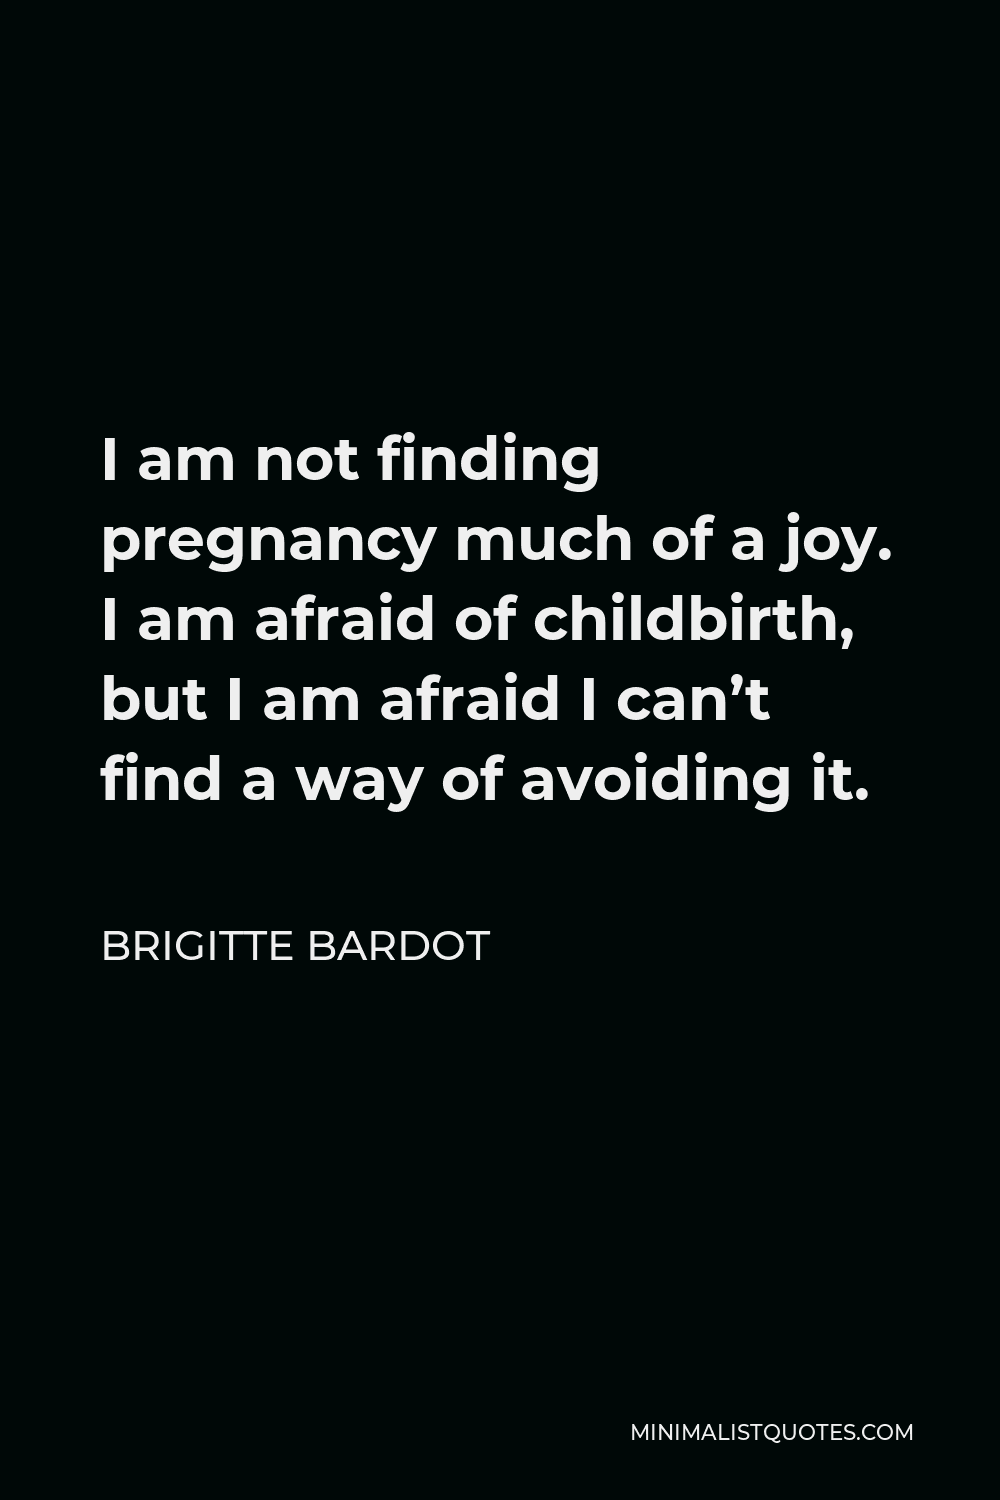 Brigitte Bardot Quote - I am not finding pregnancy much of a joy. I am afraid of childbirth, but I am afraid I can’t find a way of avoiding it.